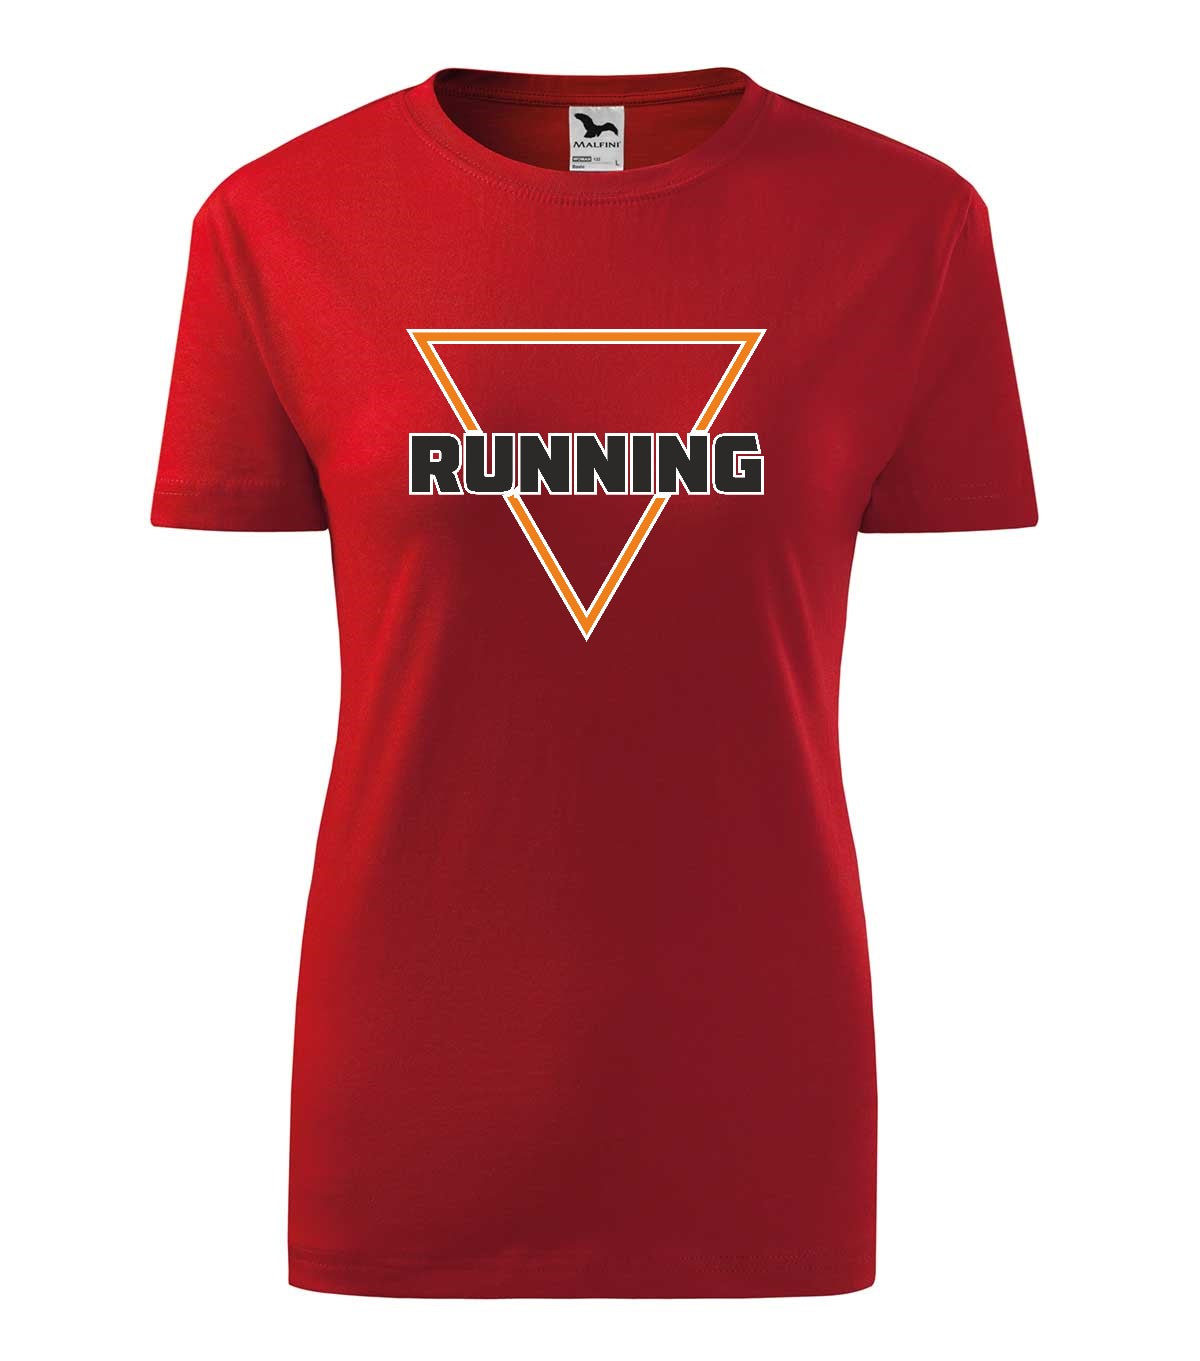 Running női technikai póló